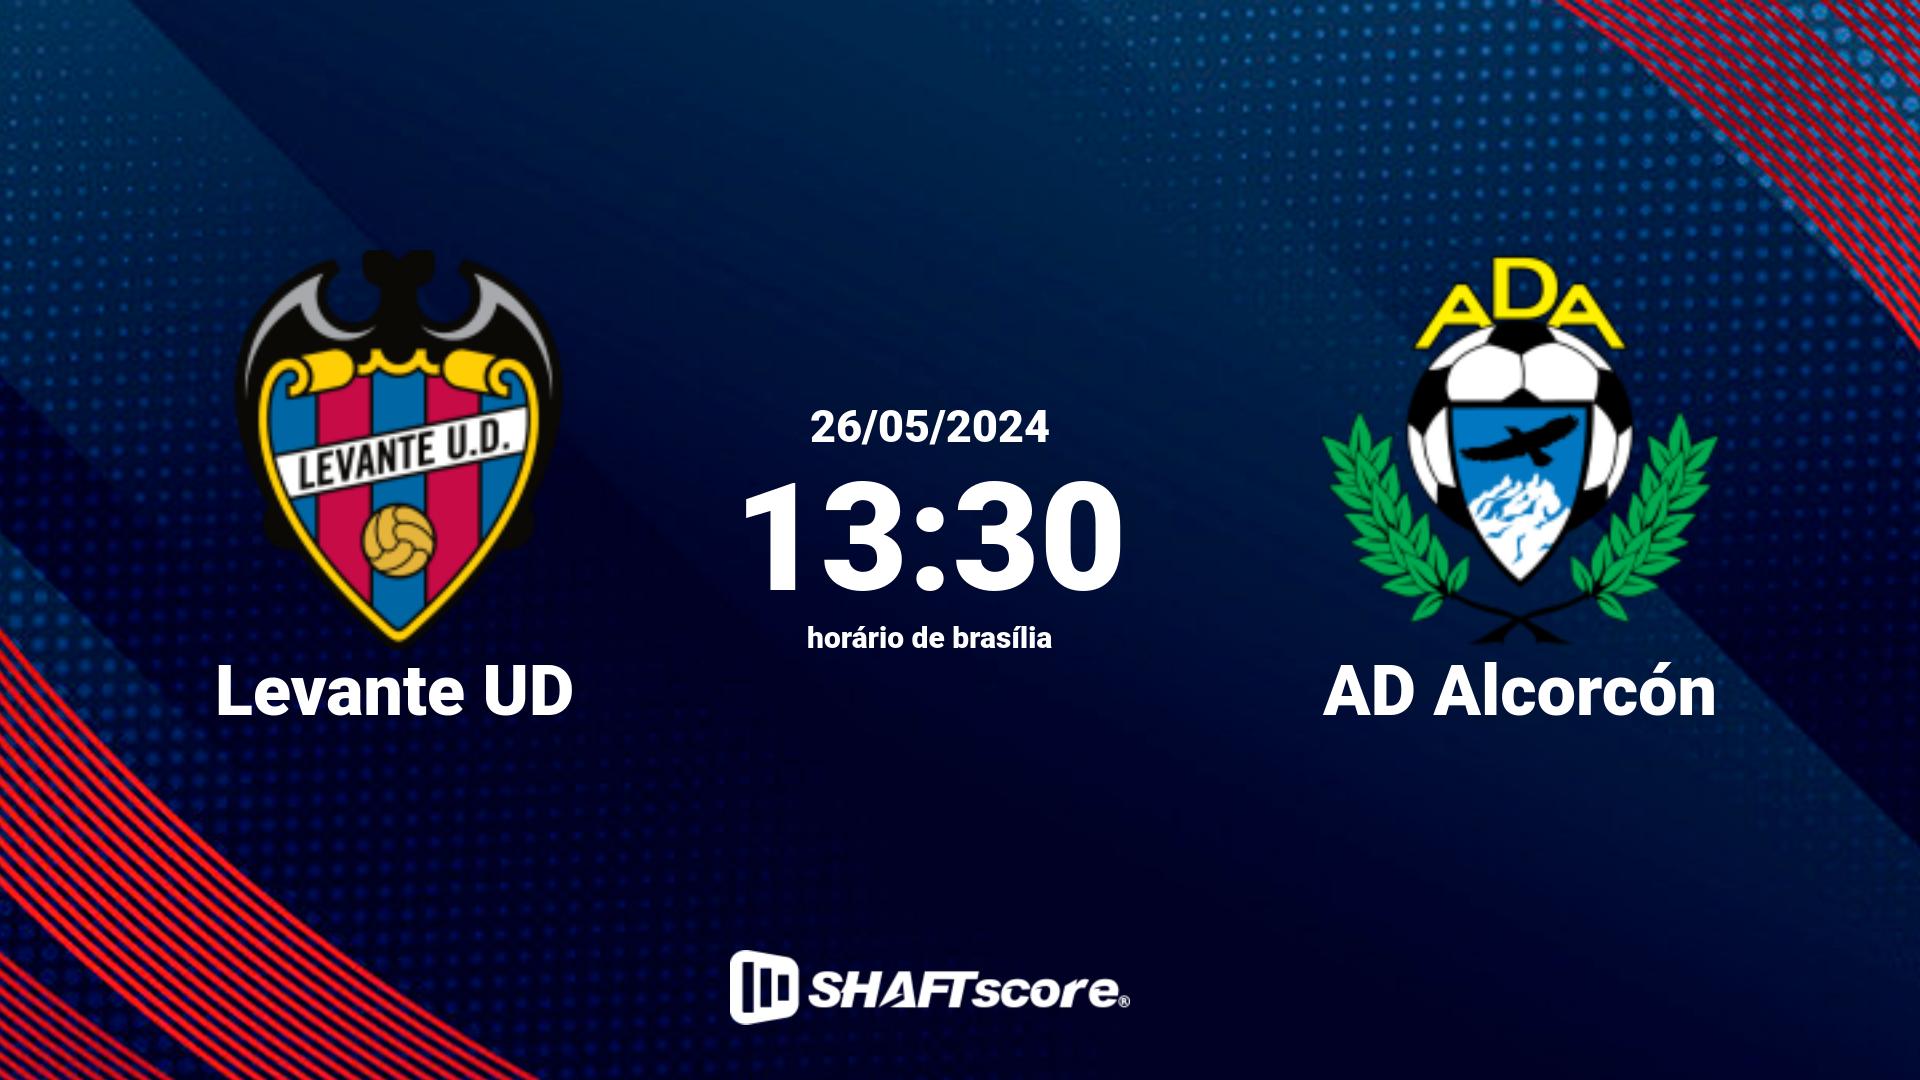 Estatísticas do jogo Levante UD vs AD Alcorcón 26.05 13:30